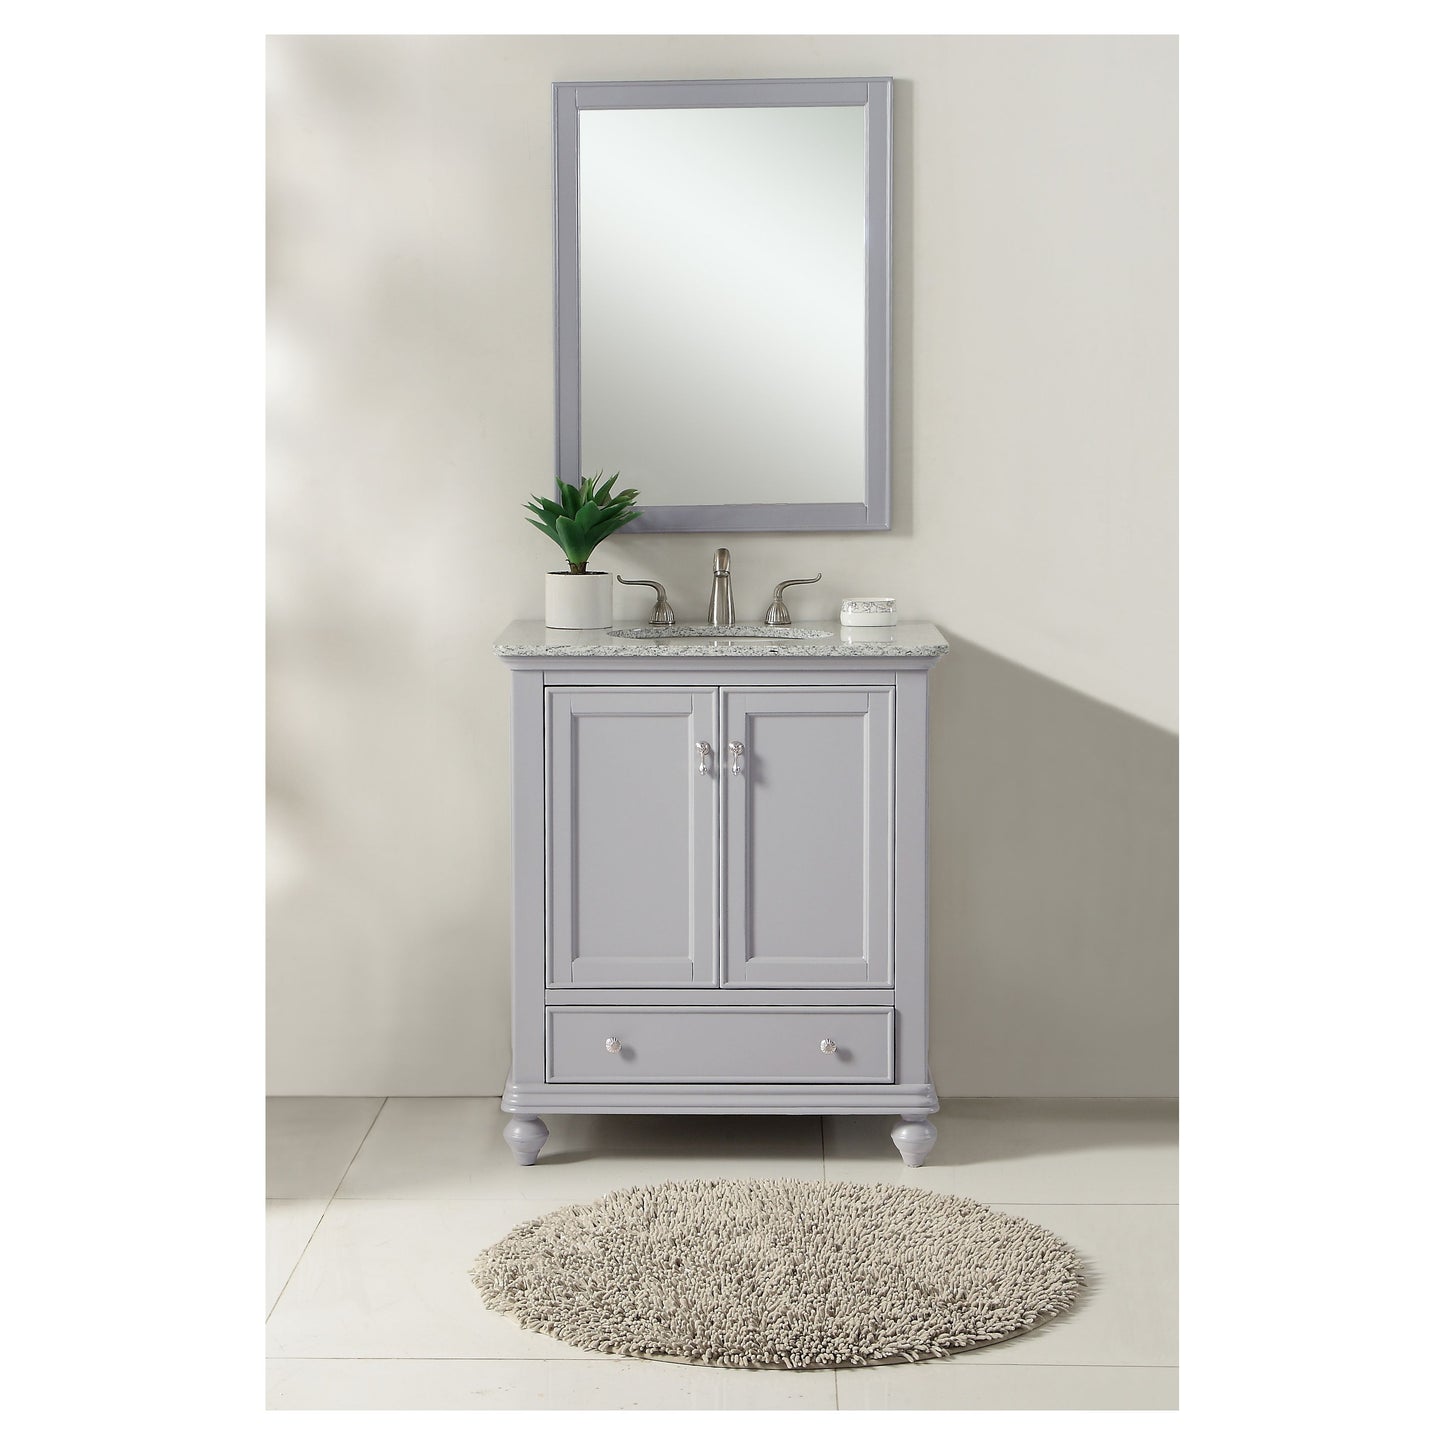 VF12330GR 30" Single Bathroom Vanity Set in Light Grey